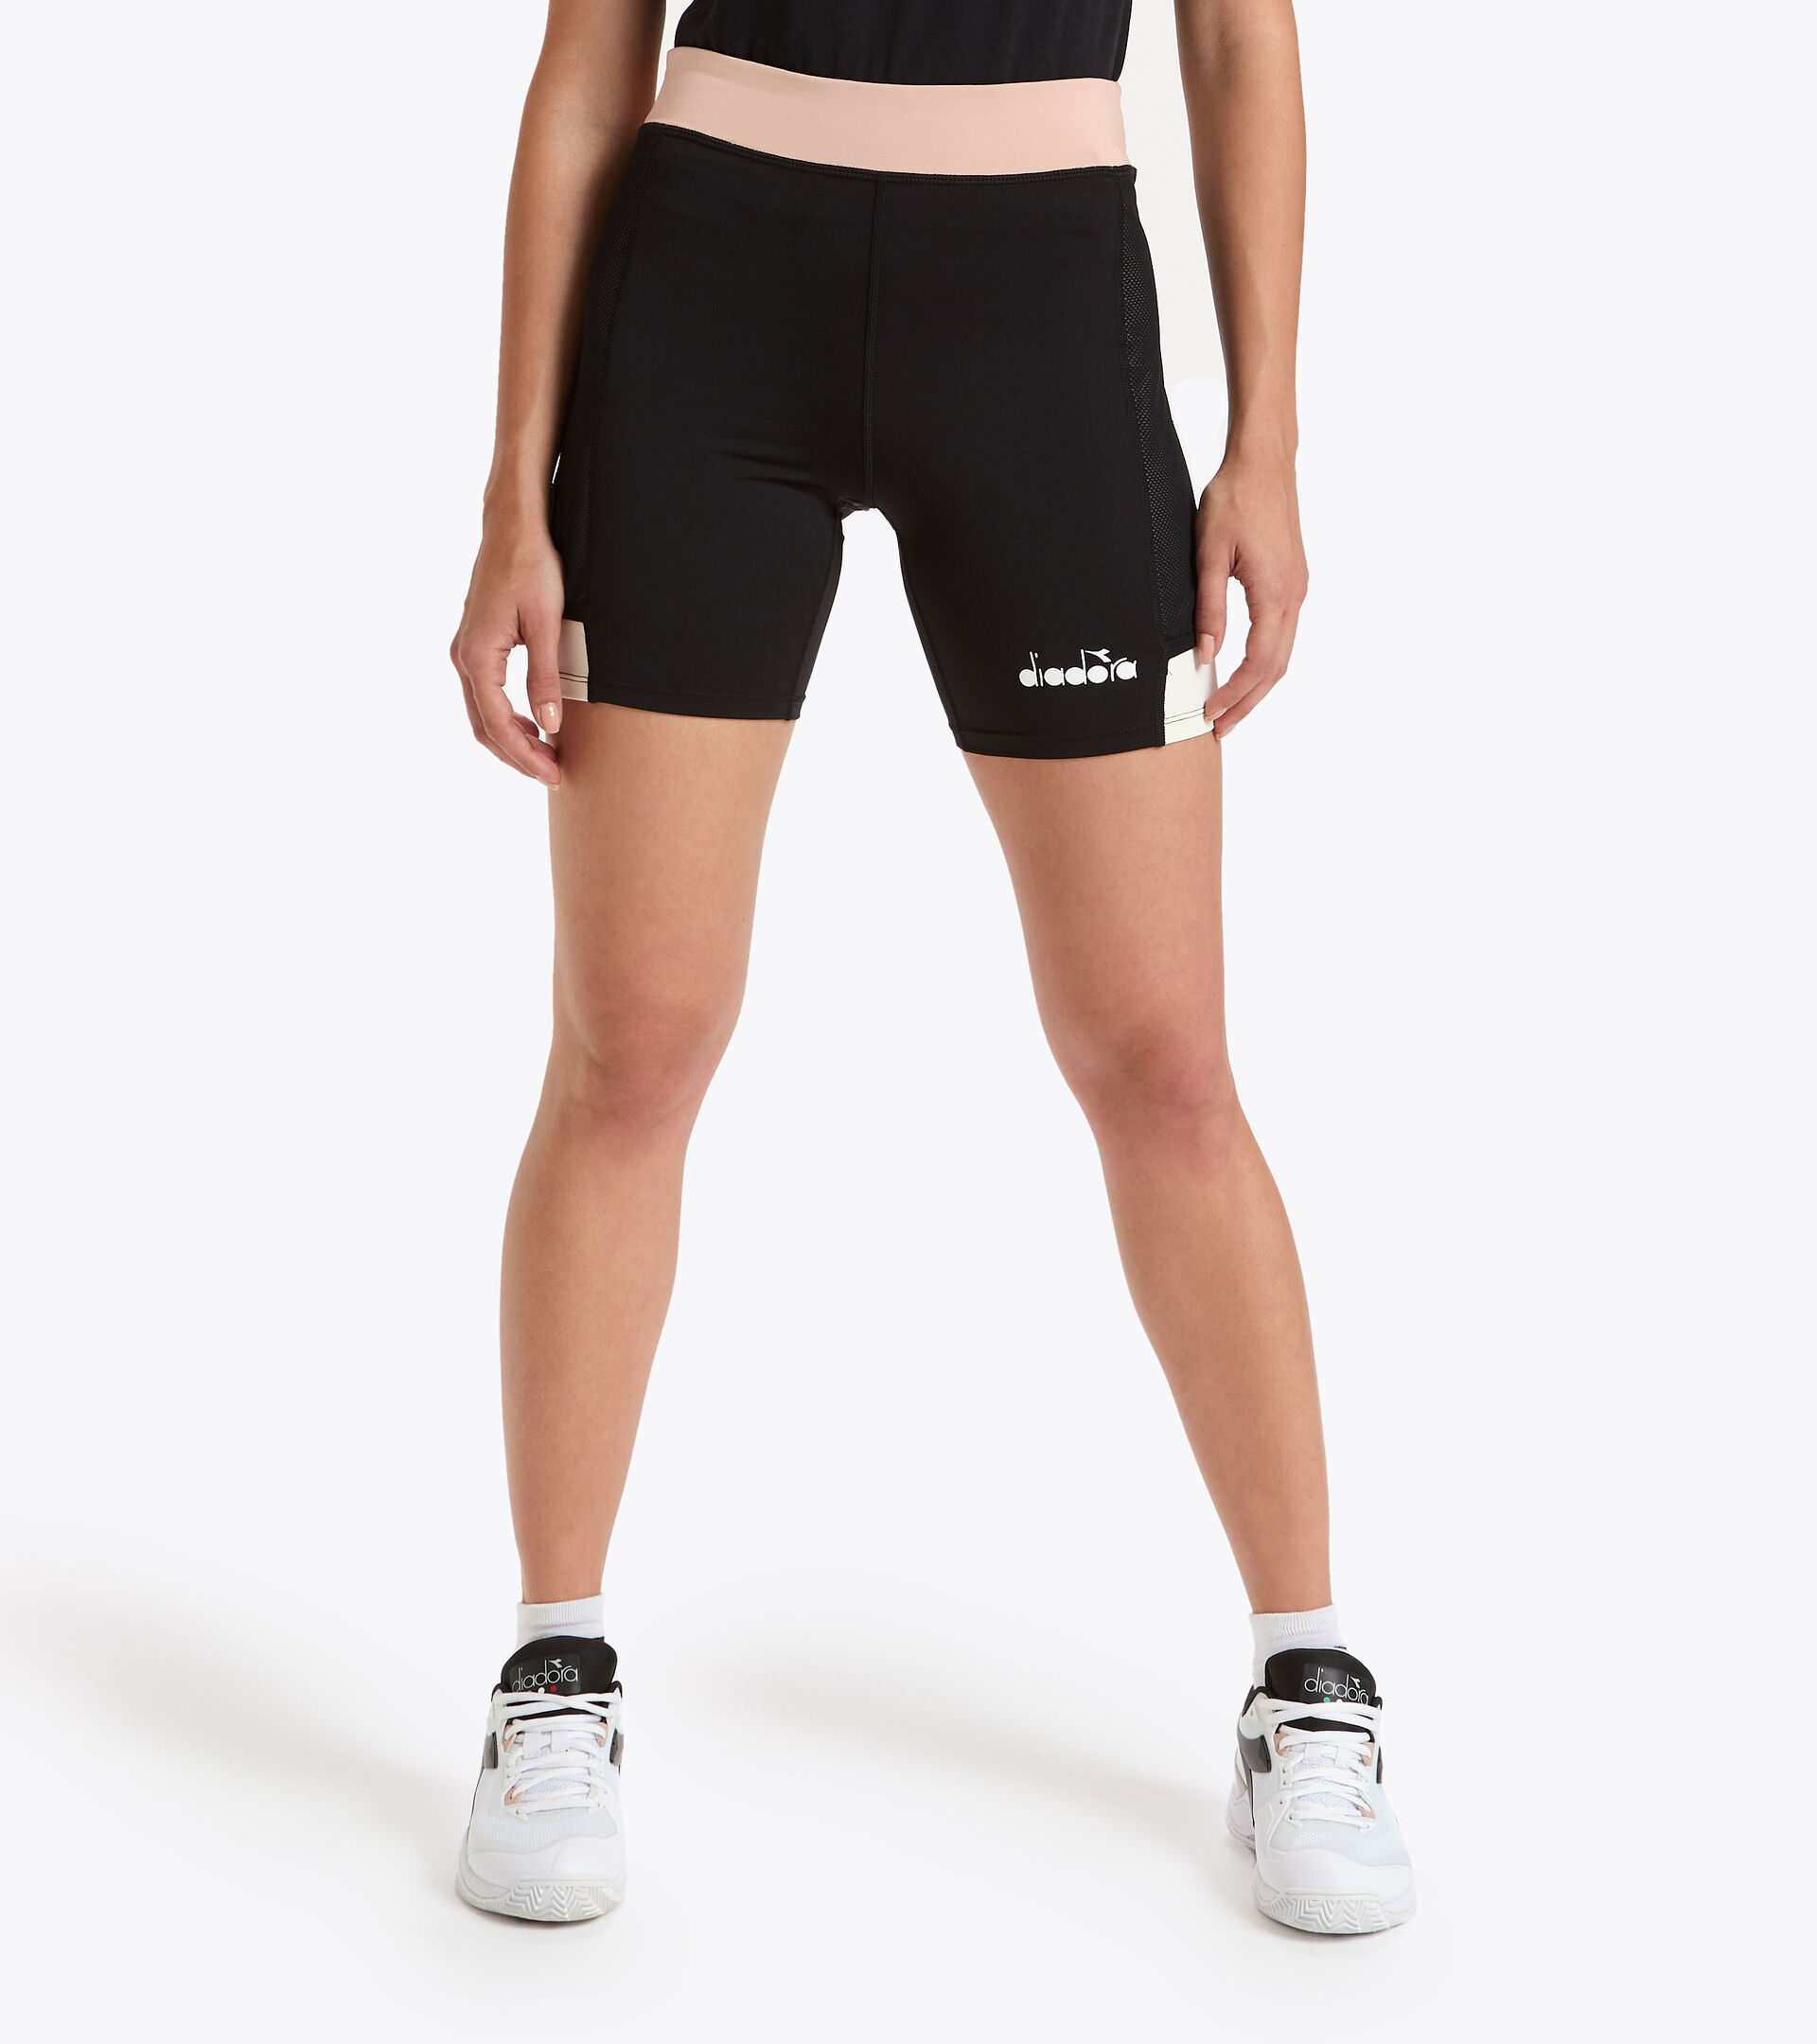 Damen-Tennis-Shorts L. SHORT TIGHTS POCKET SCHWARZ/MAHAGONI ROSE - Diadora